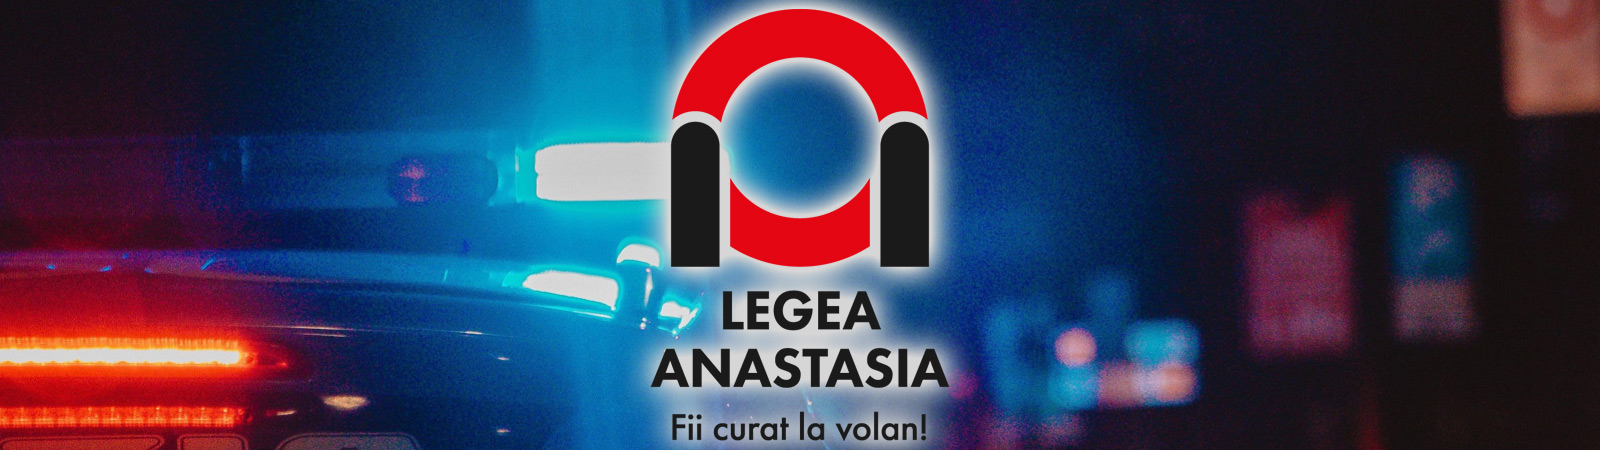 legea-anastasia-desktop